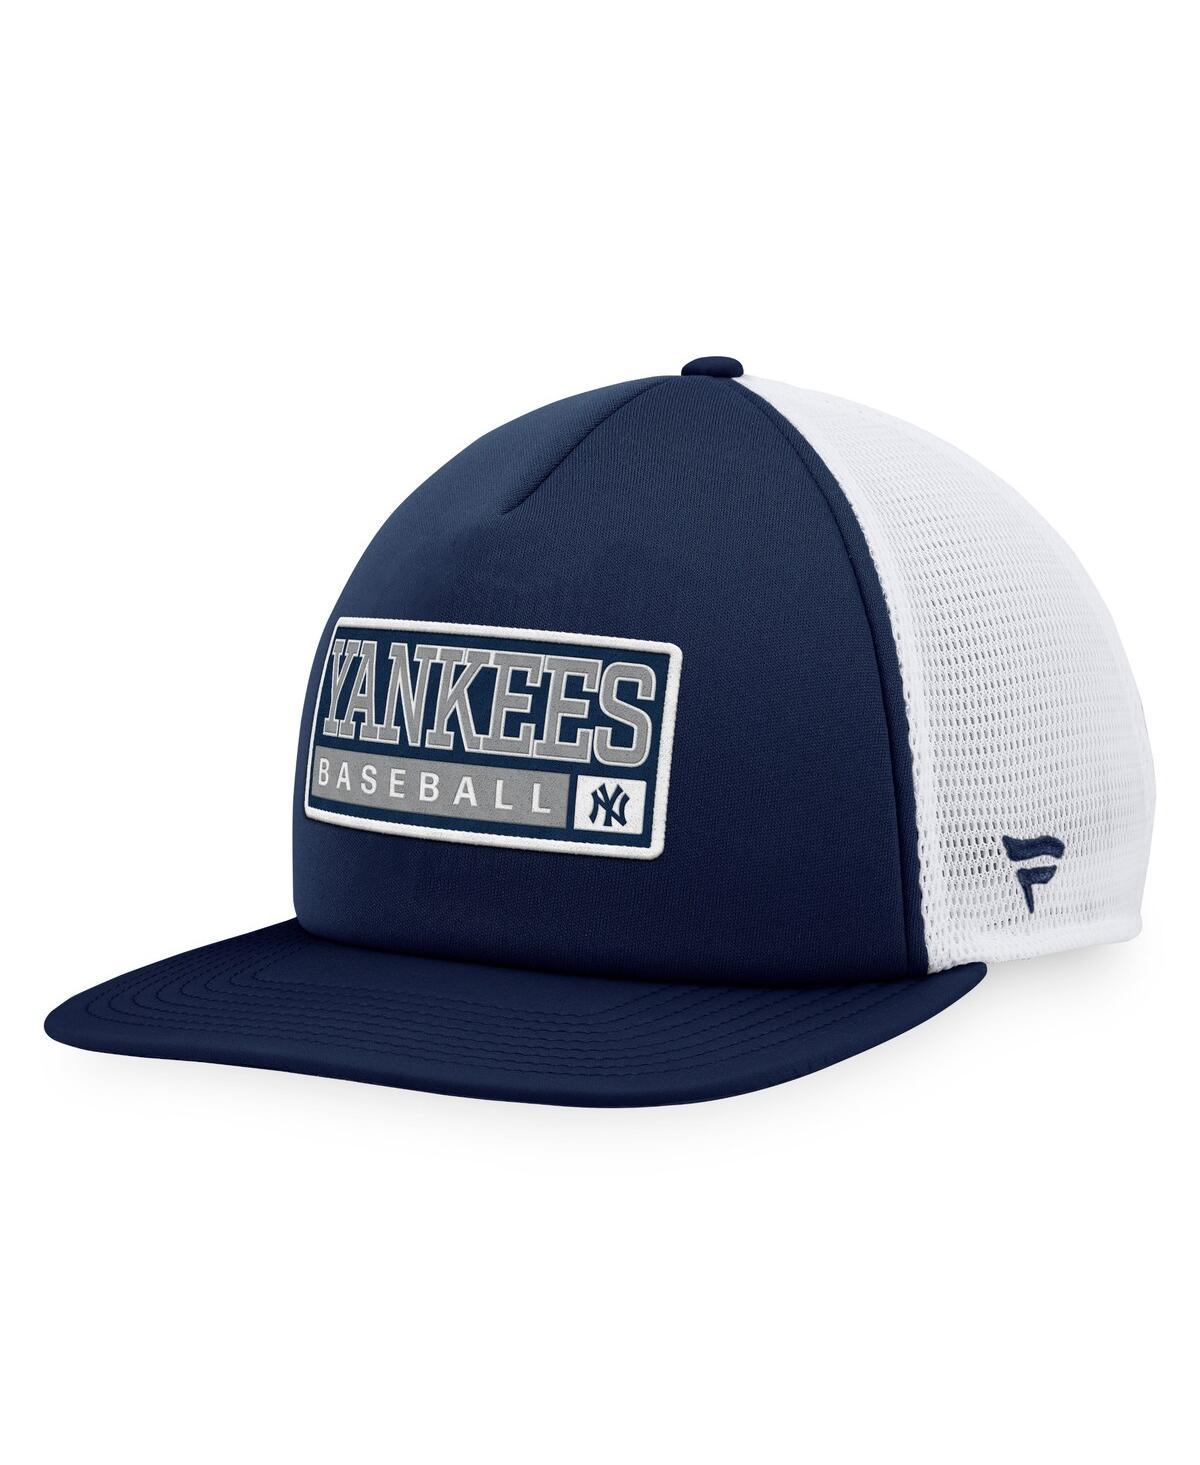 Men's Majestic Navy, White New York Yankees Foam Trucker Snapback Hat - Navy, White